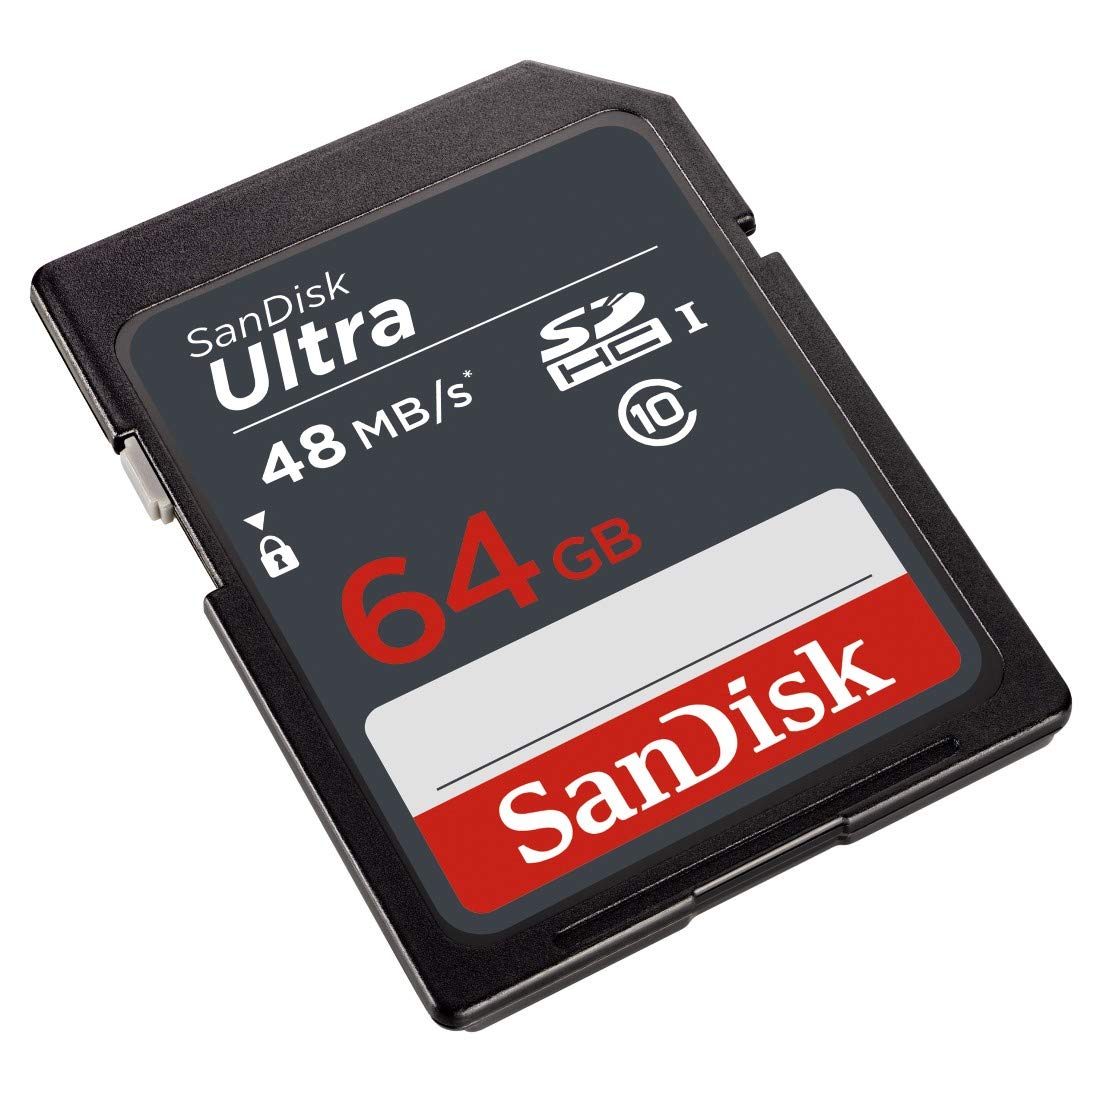 SanDisk Ultra 64GB SDXC UHS-I Class 10 48MB's Memory Card